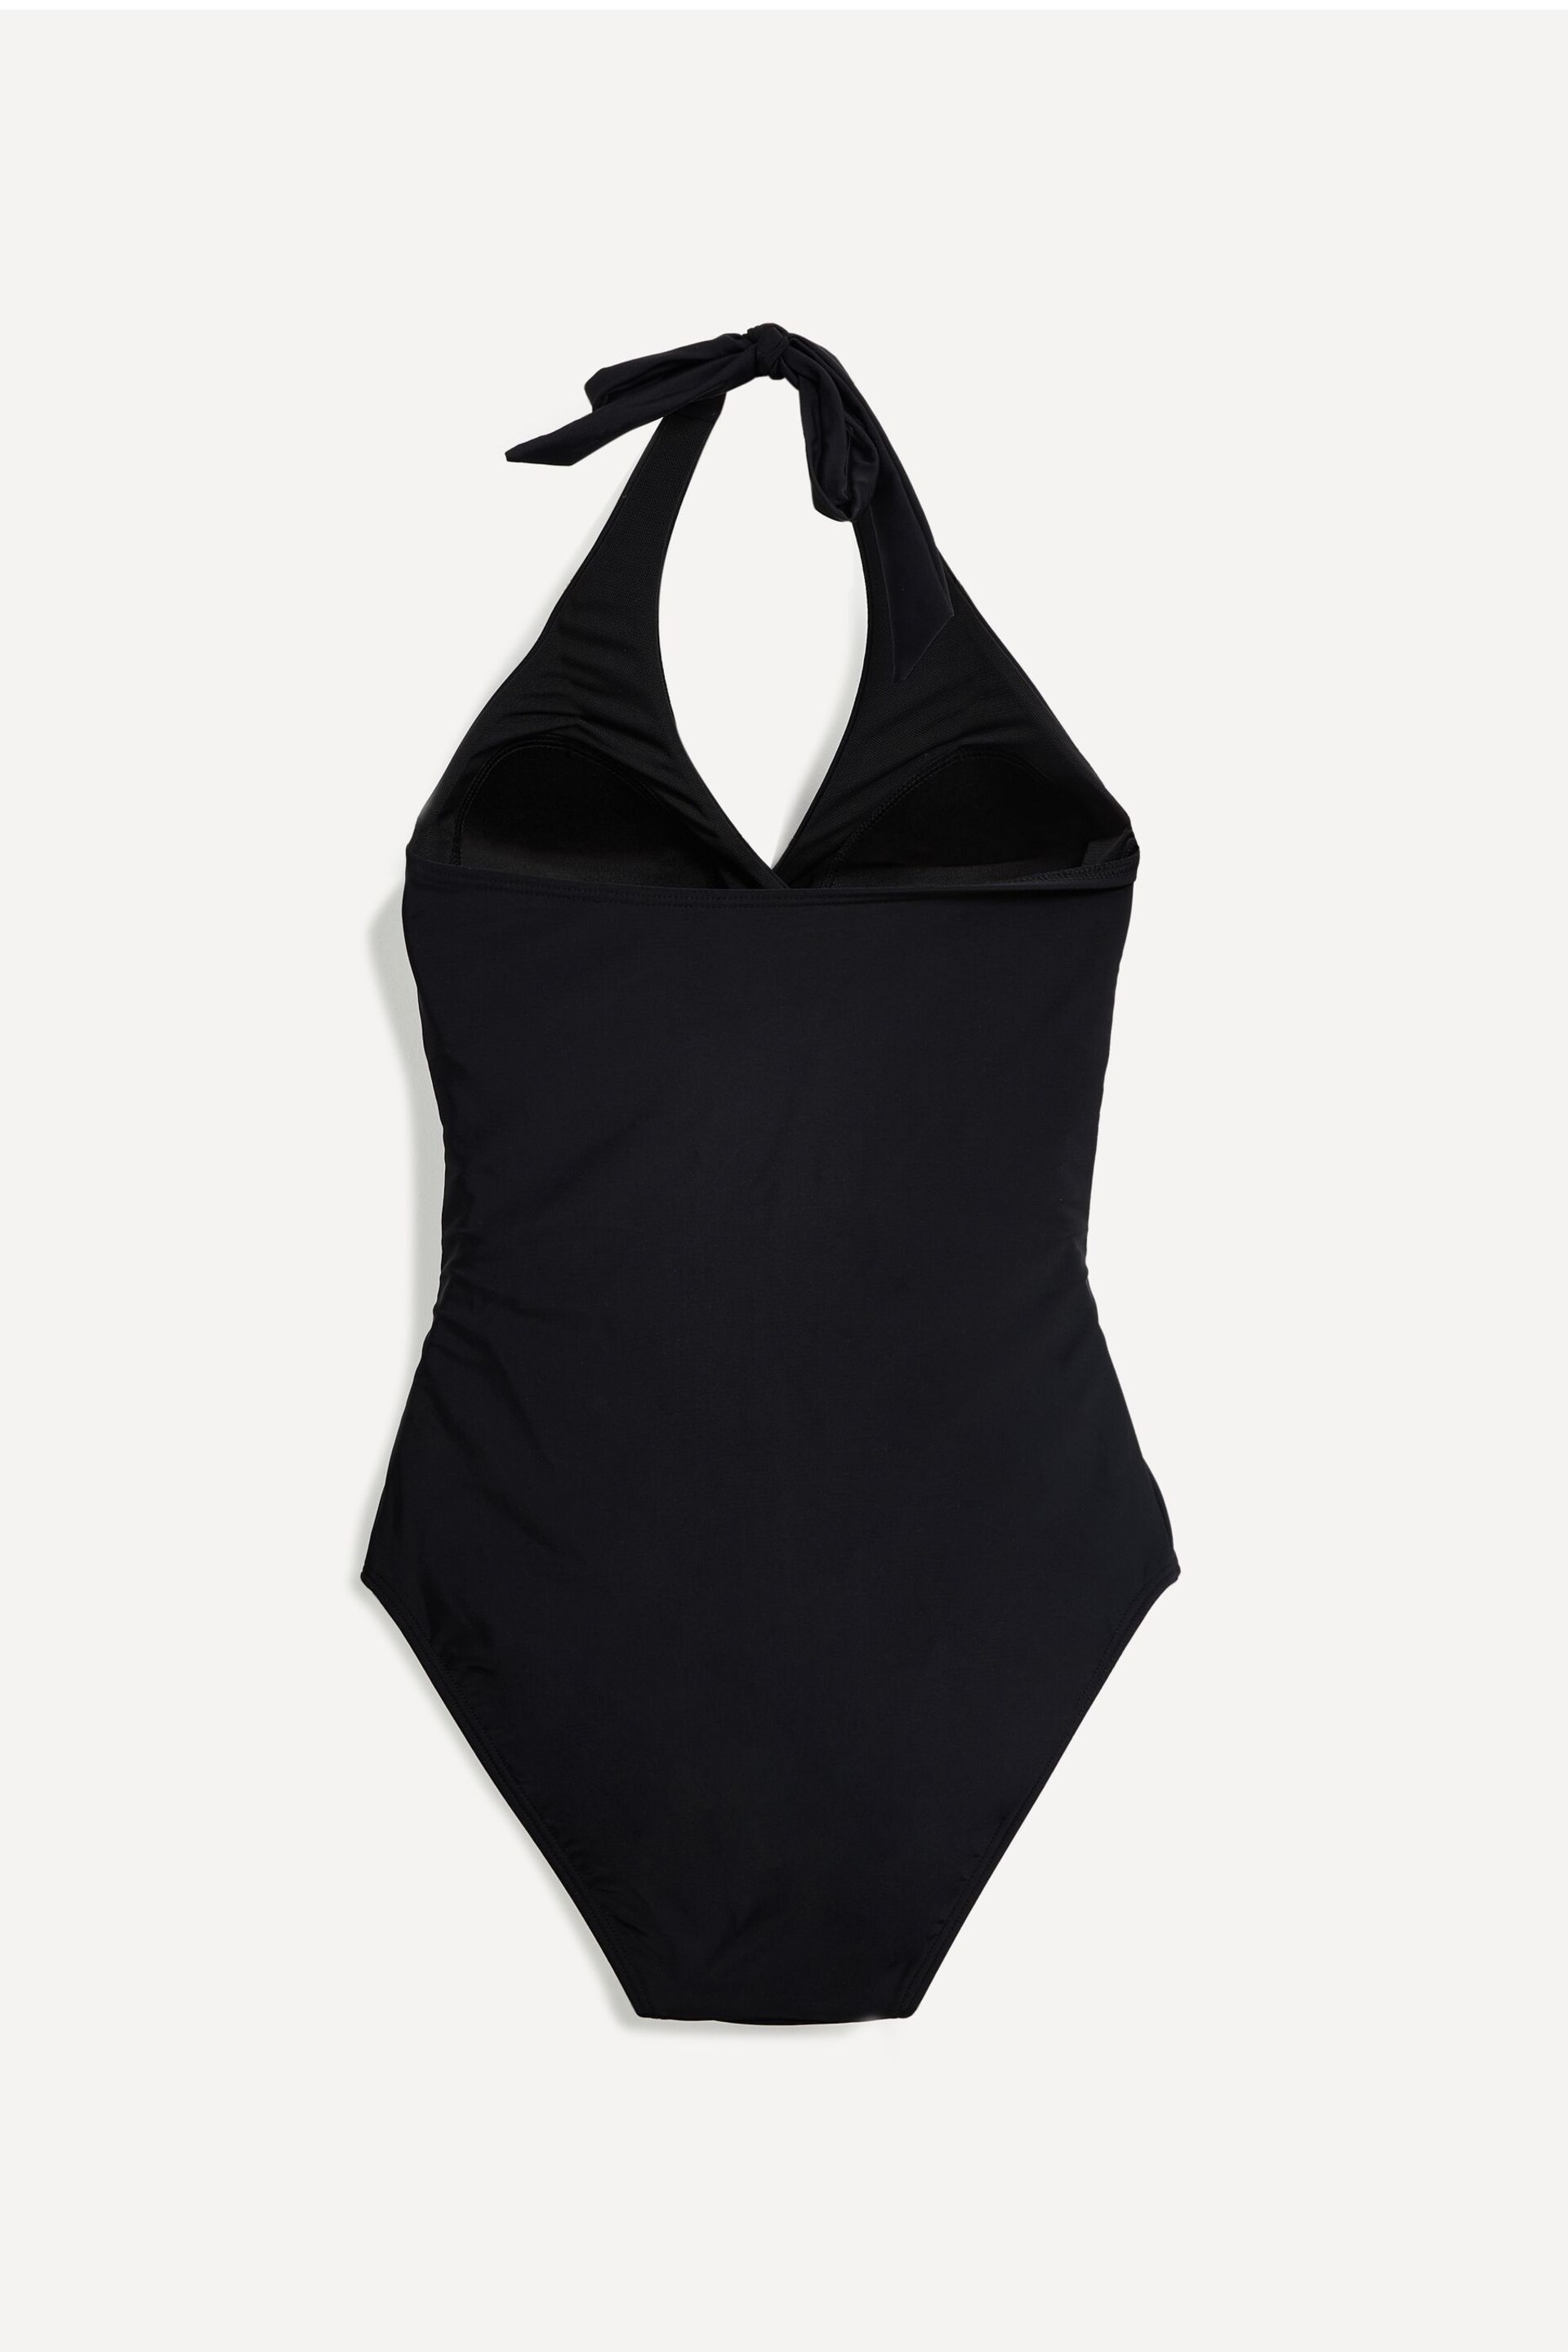 Linzi Black Paros Halterneck Tummy Control Ruched Swimsuit - Image 4 of 6